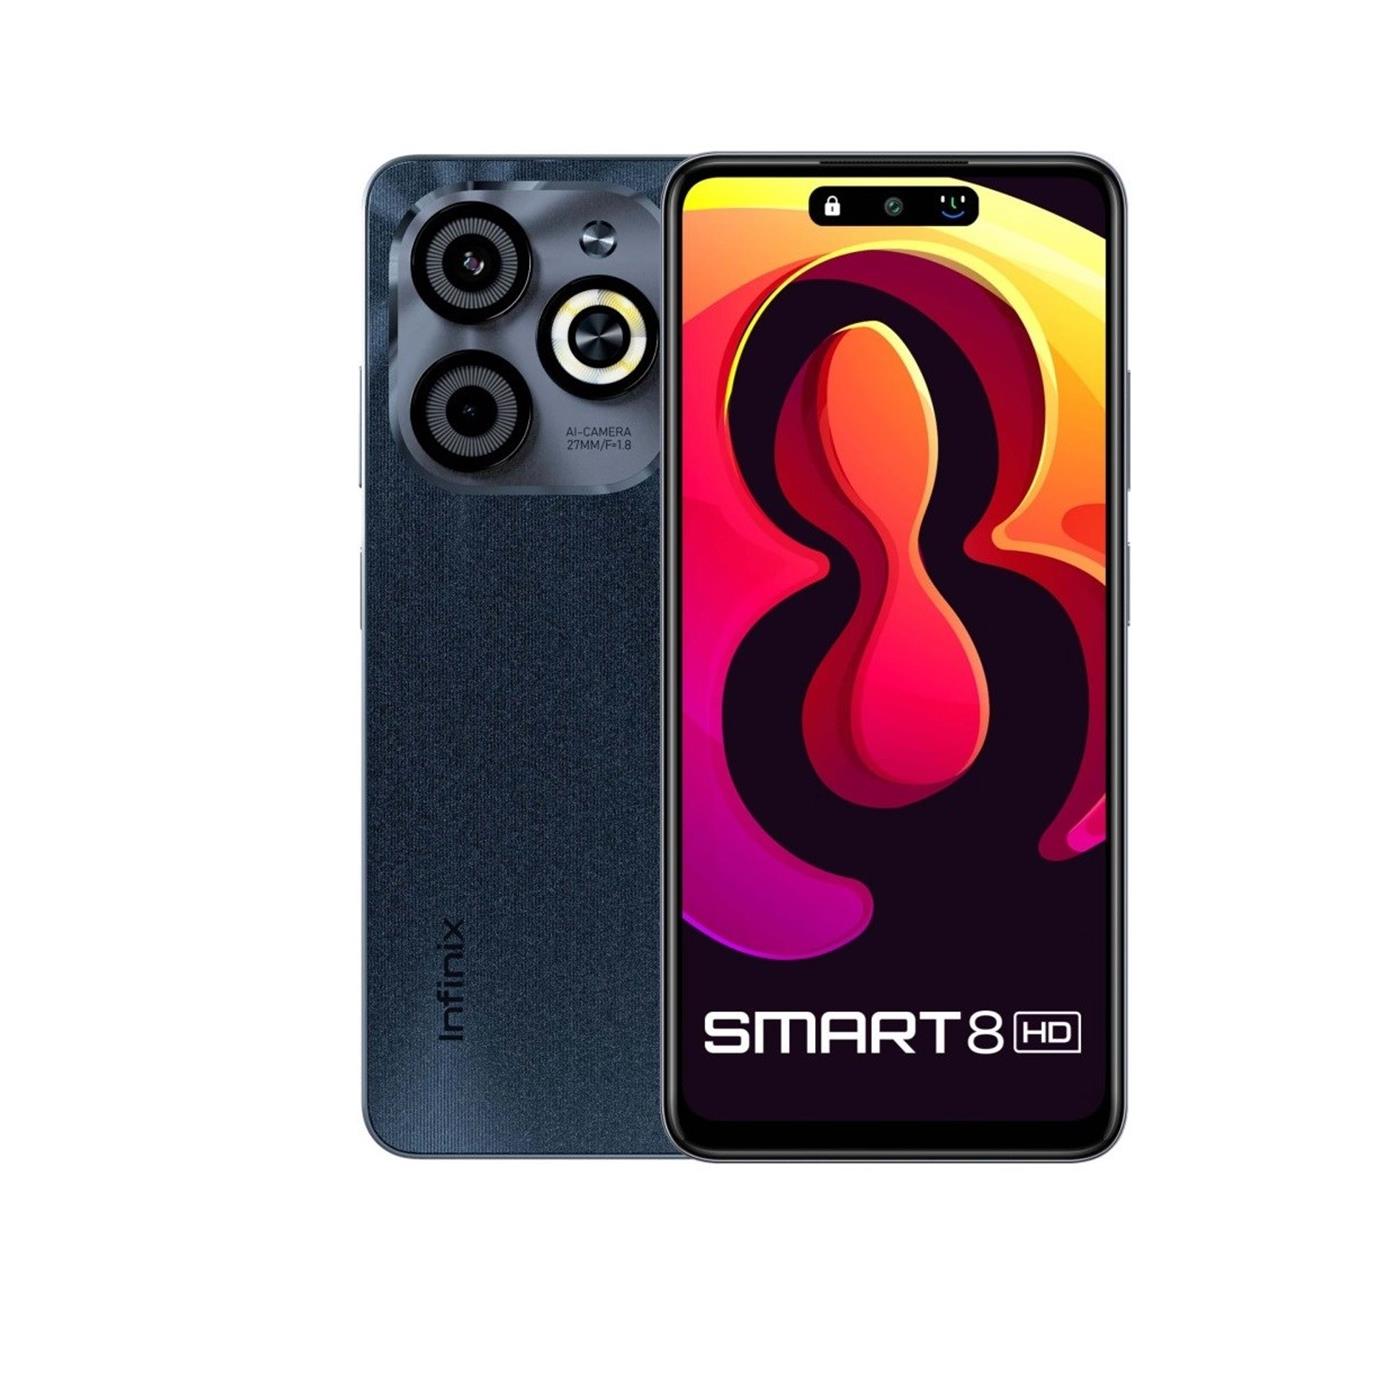 Infinix Smart 8 HD Hard Reset